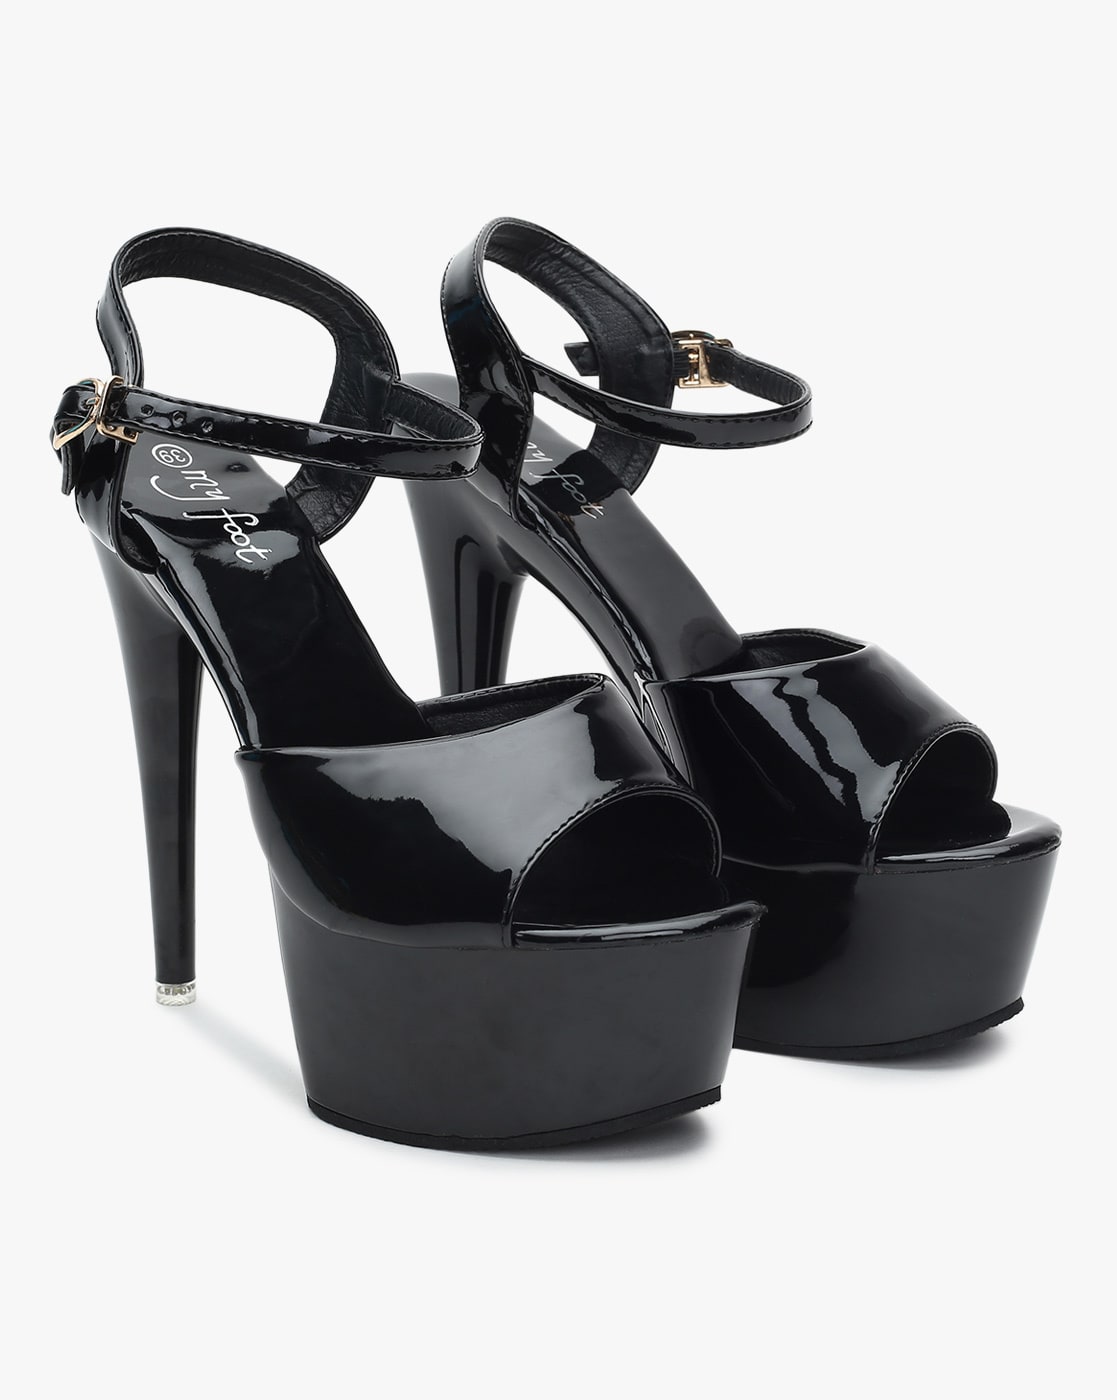 Are 5-inch heels comfortable? - Quora